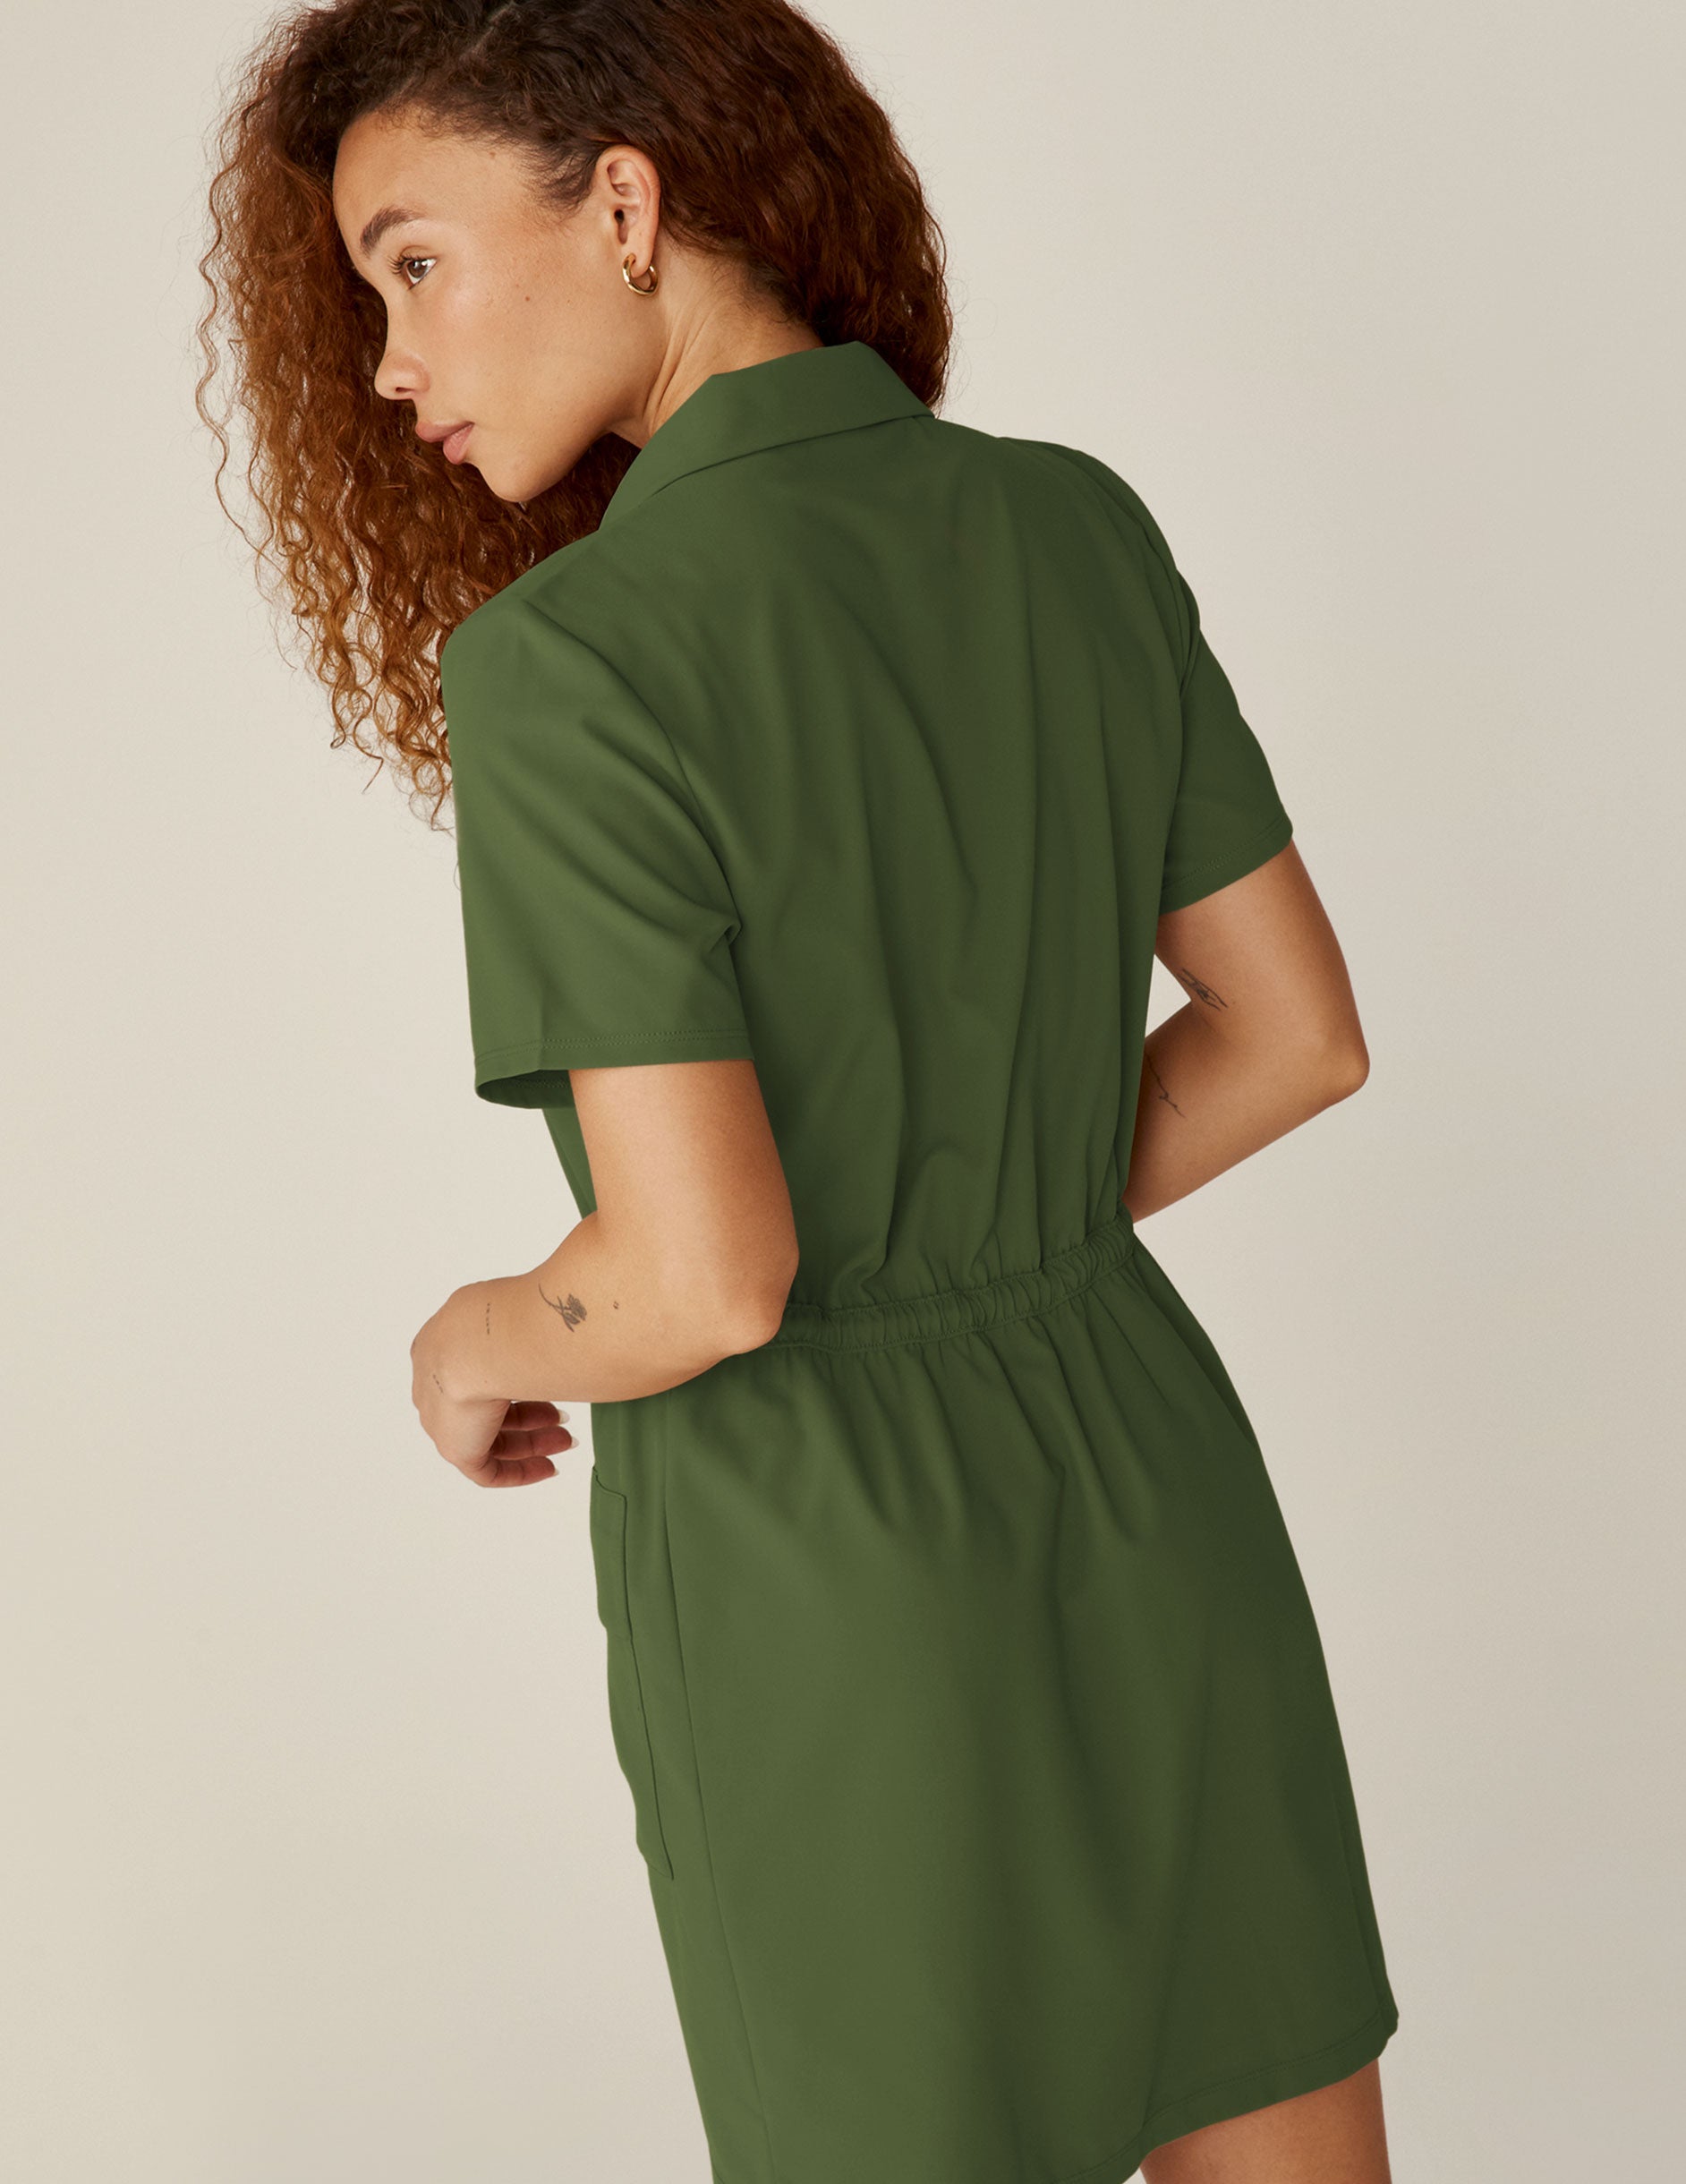 green zip-up mini dress with a drawstring at waistband and pockets.